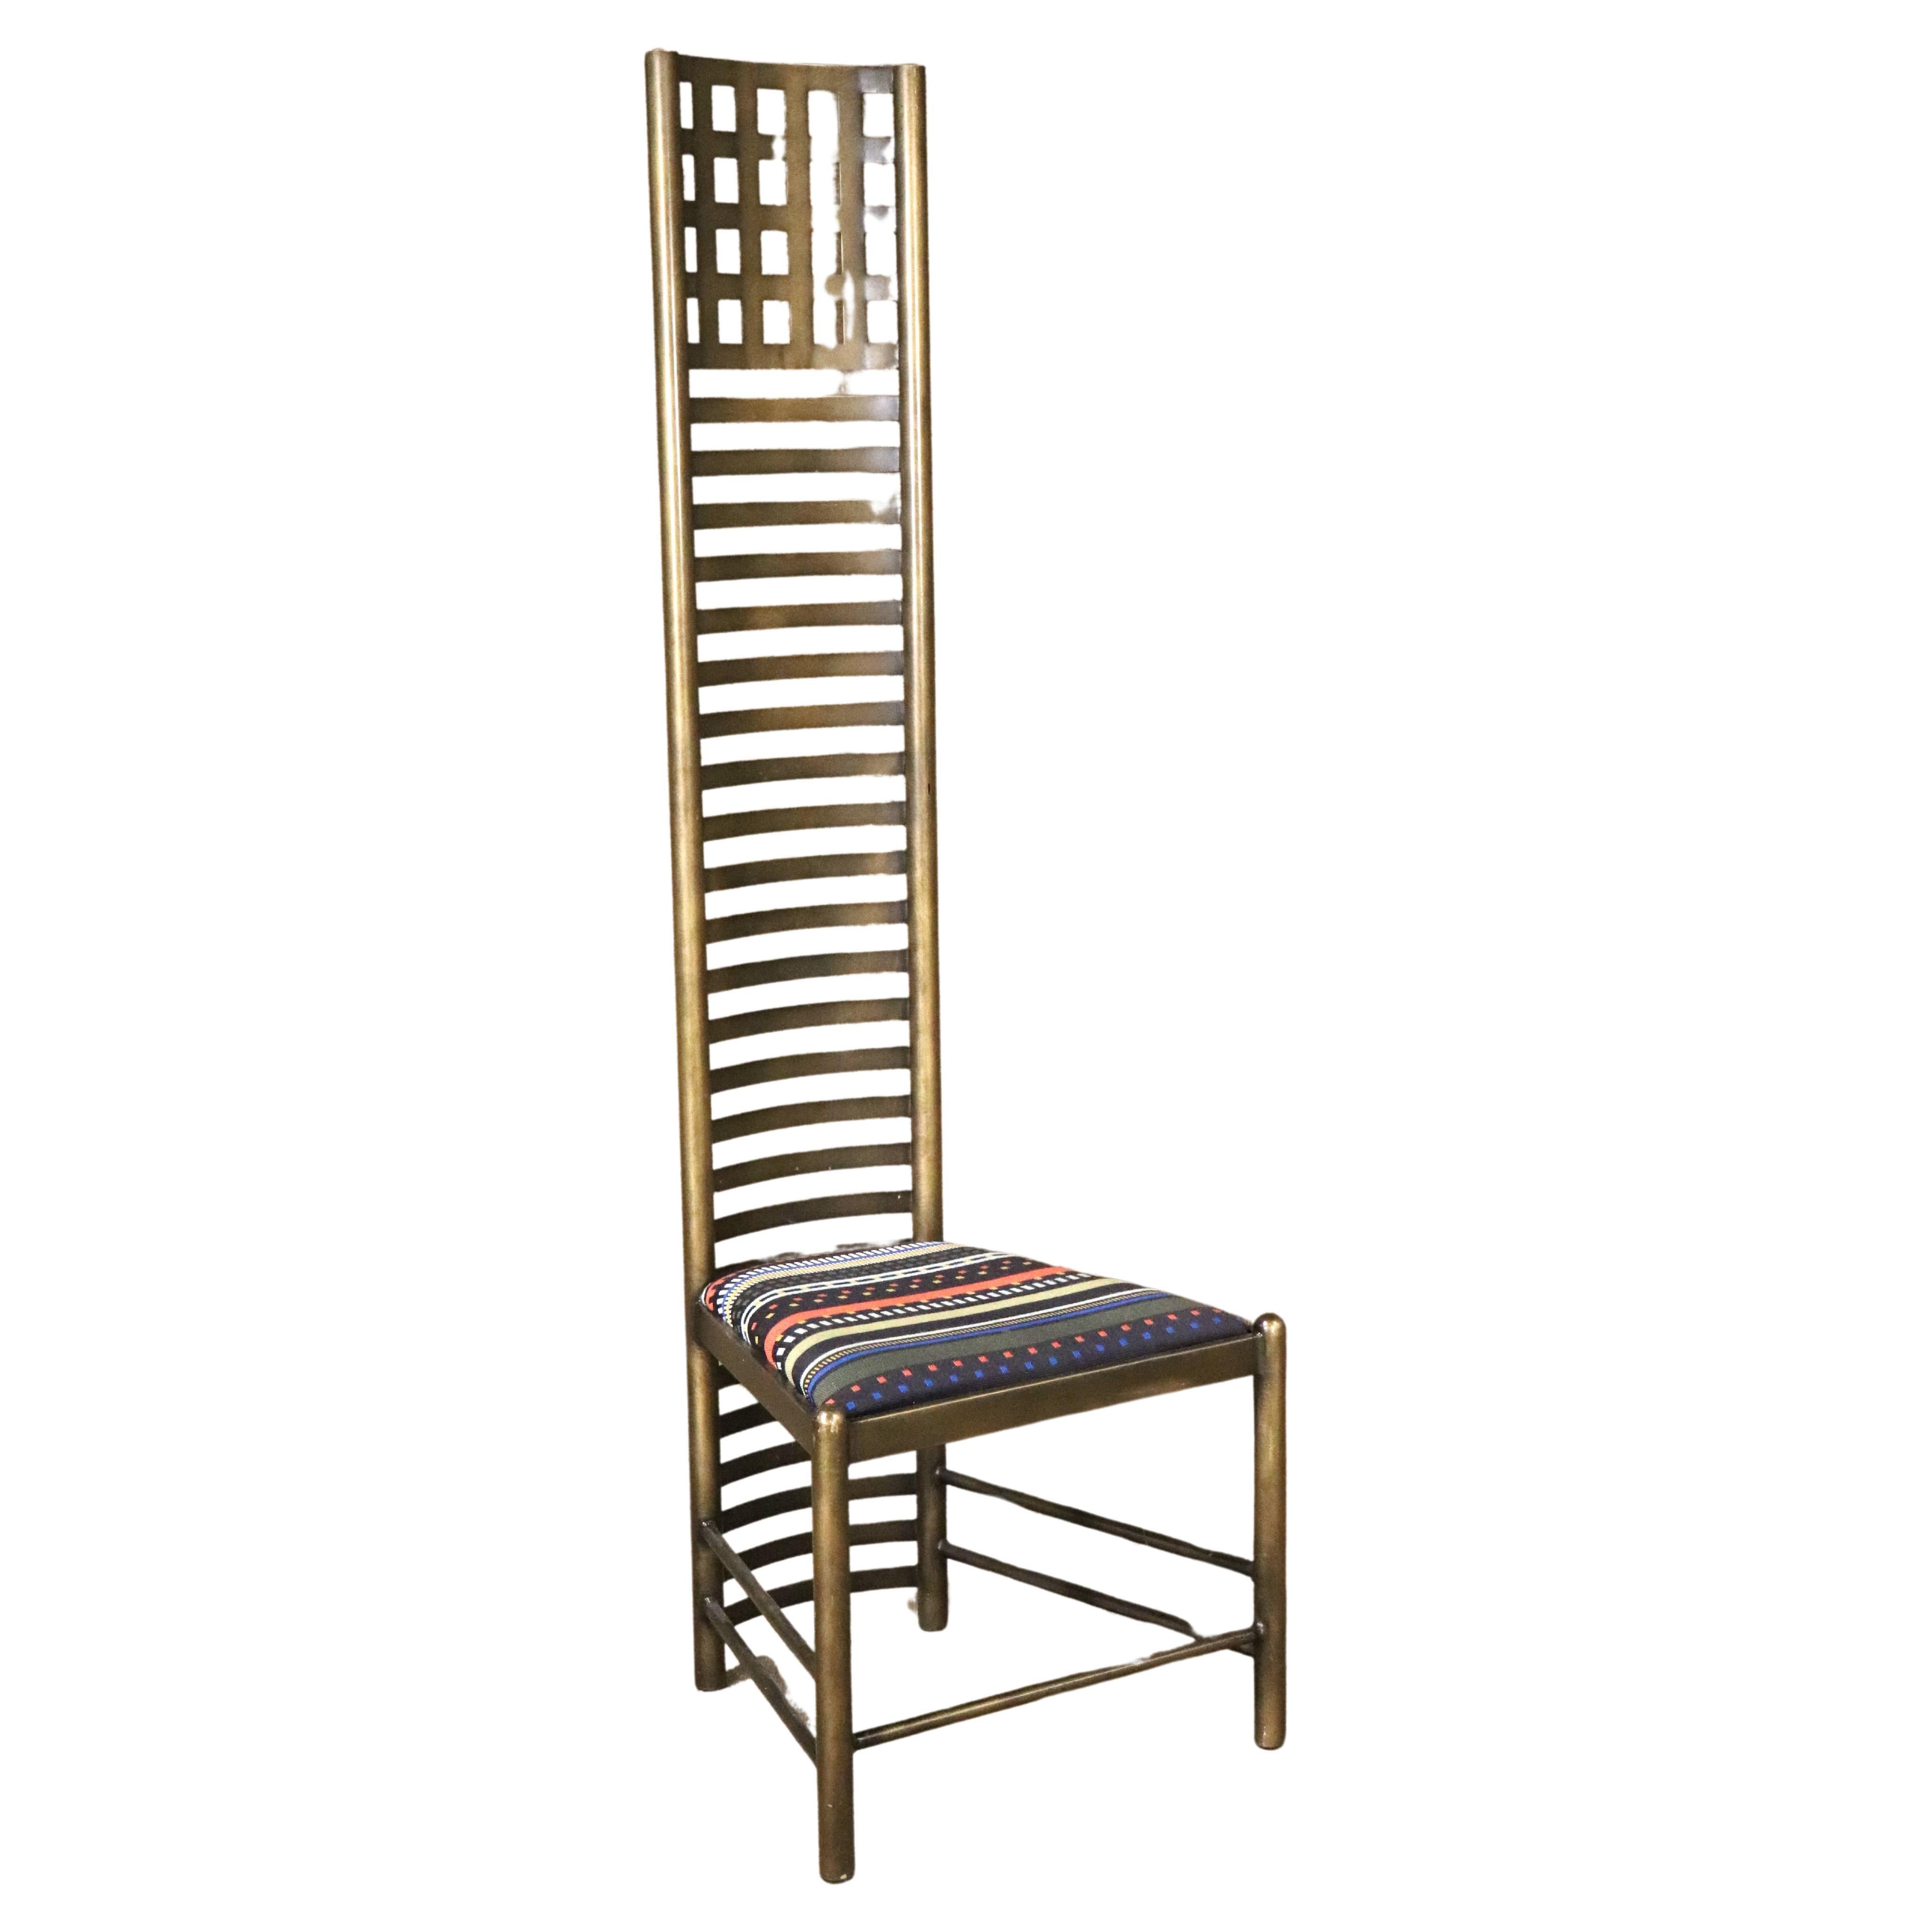 Charles Rennie Mackintosh Designed Chair by Cassina